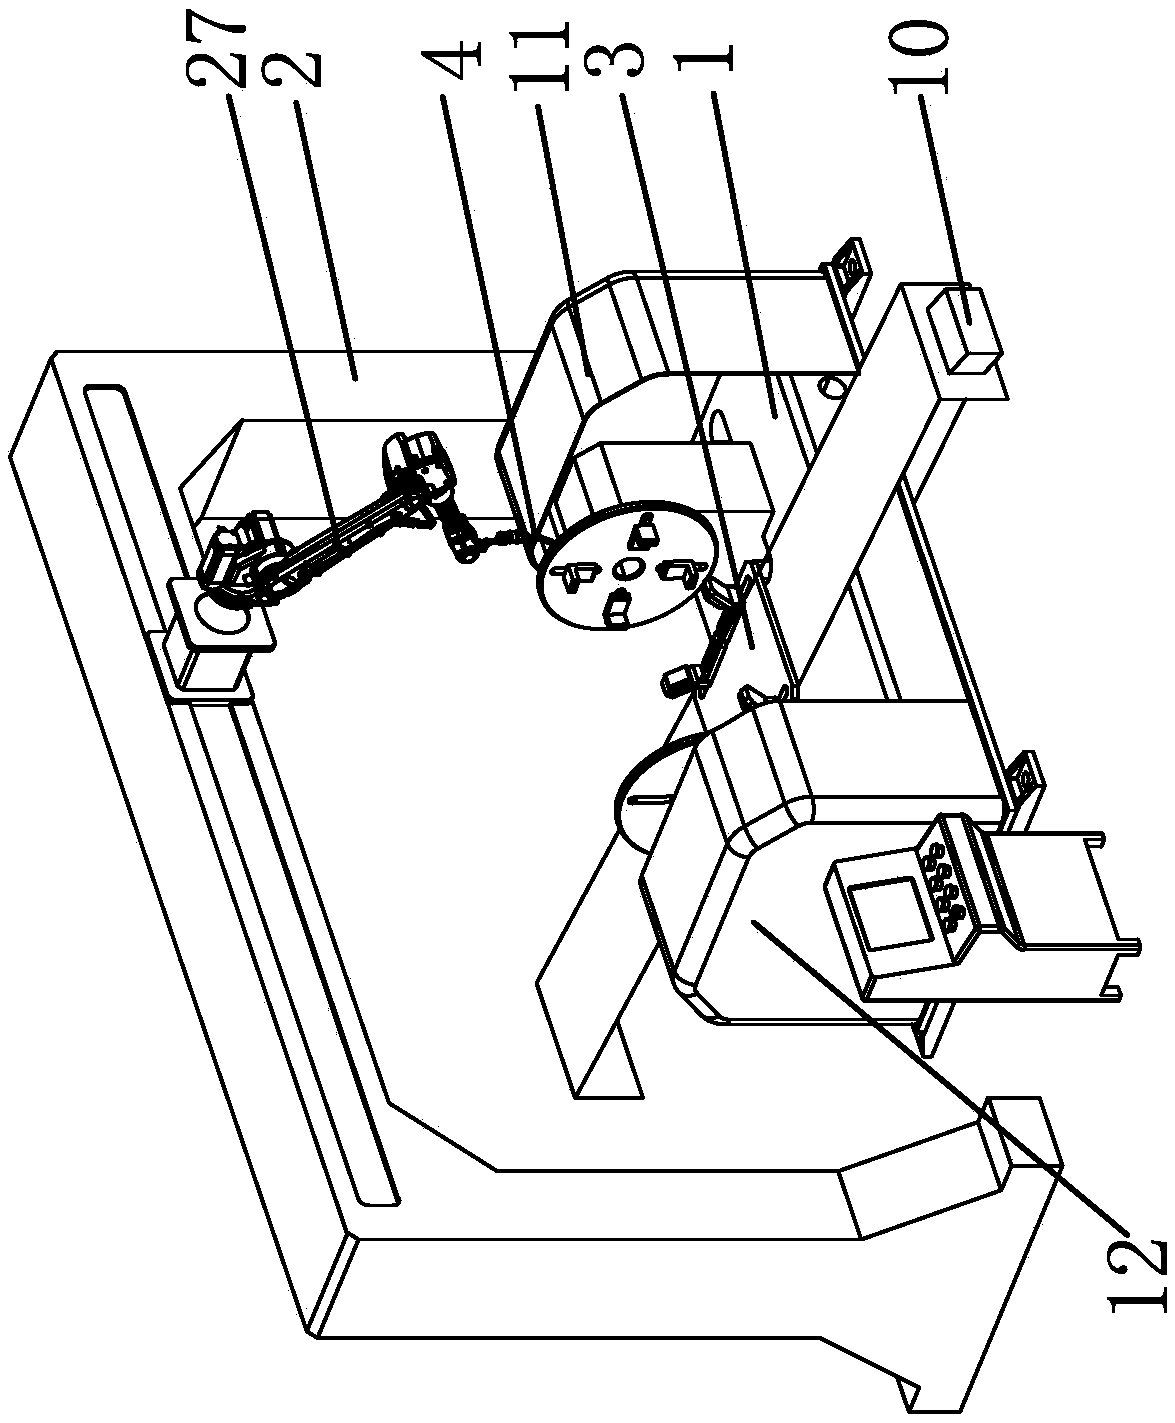 Clamping mechanism of welding machine